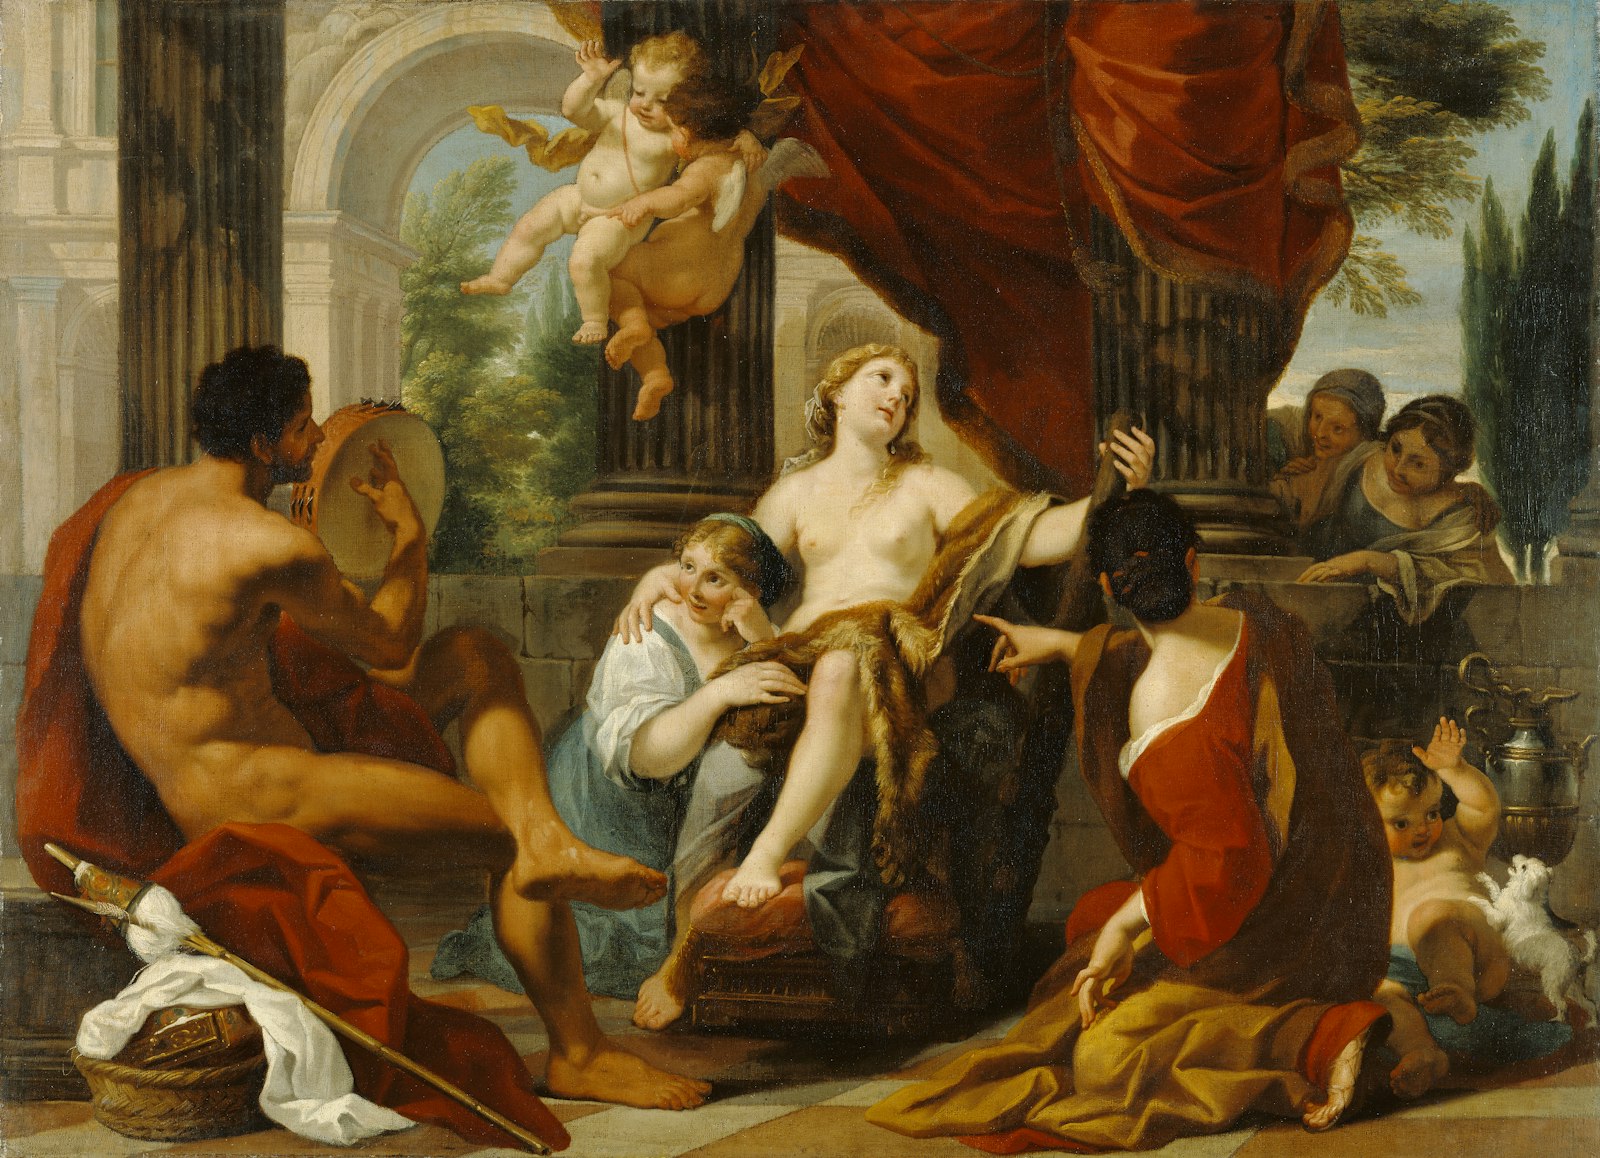 Hercules and Omphale by Luigi Garzi, circa 1700